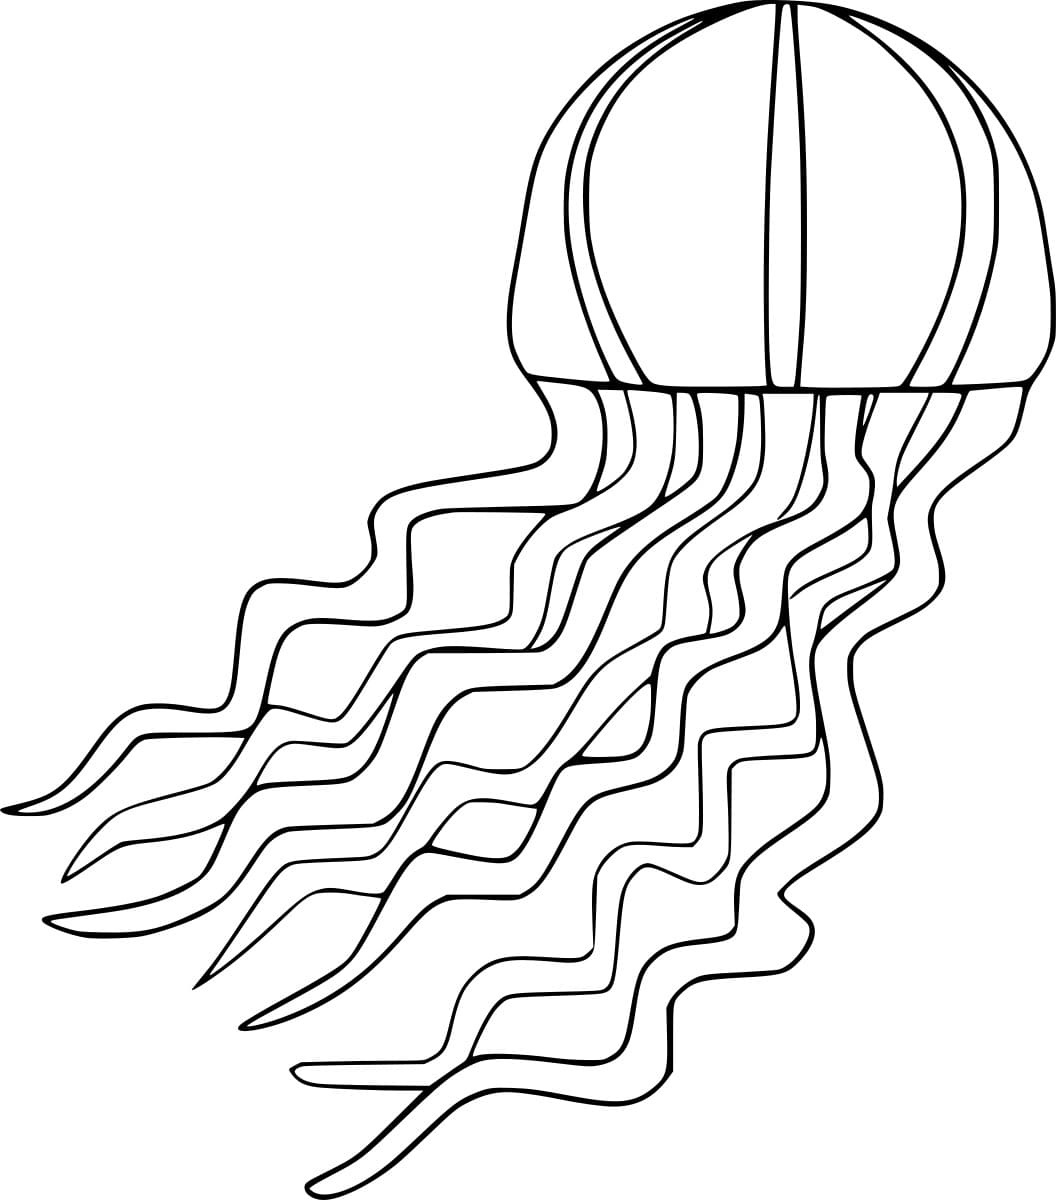 Big Jellyfish Image